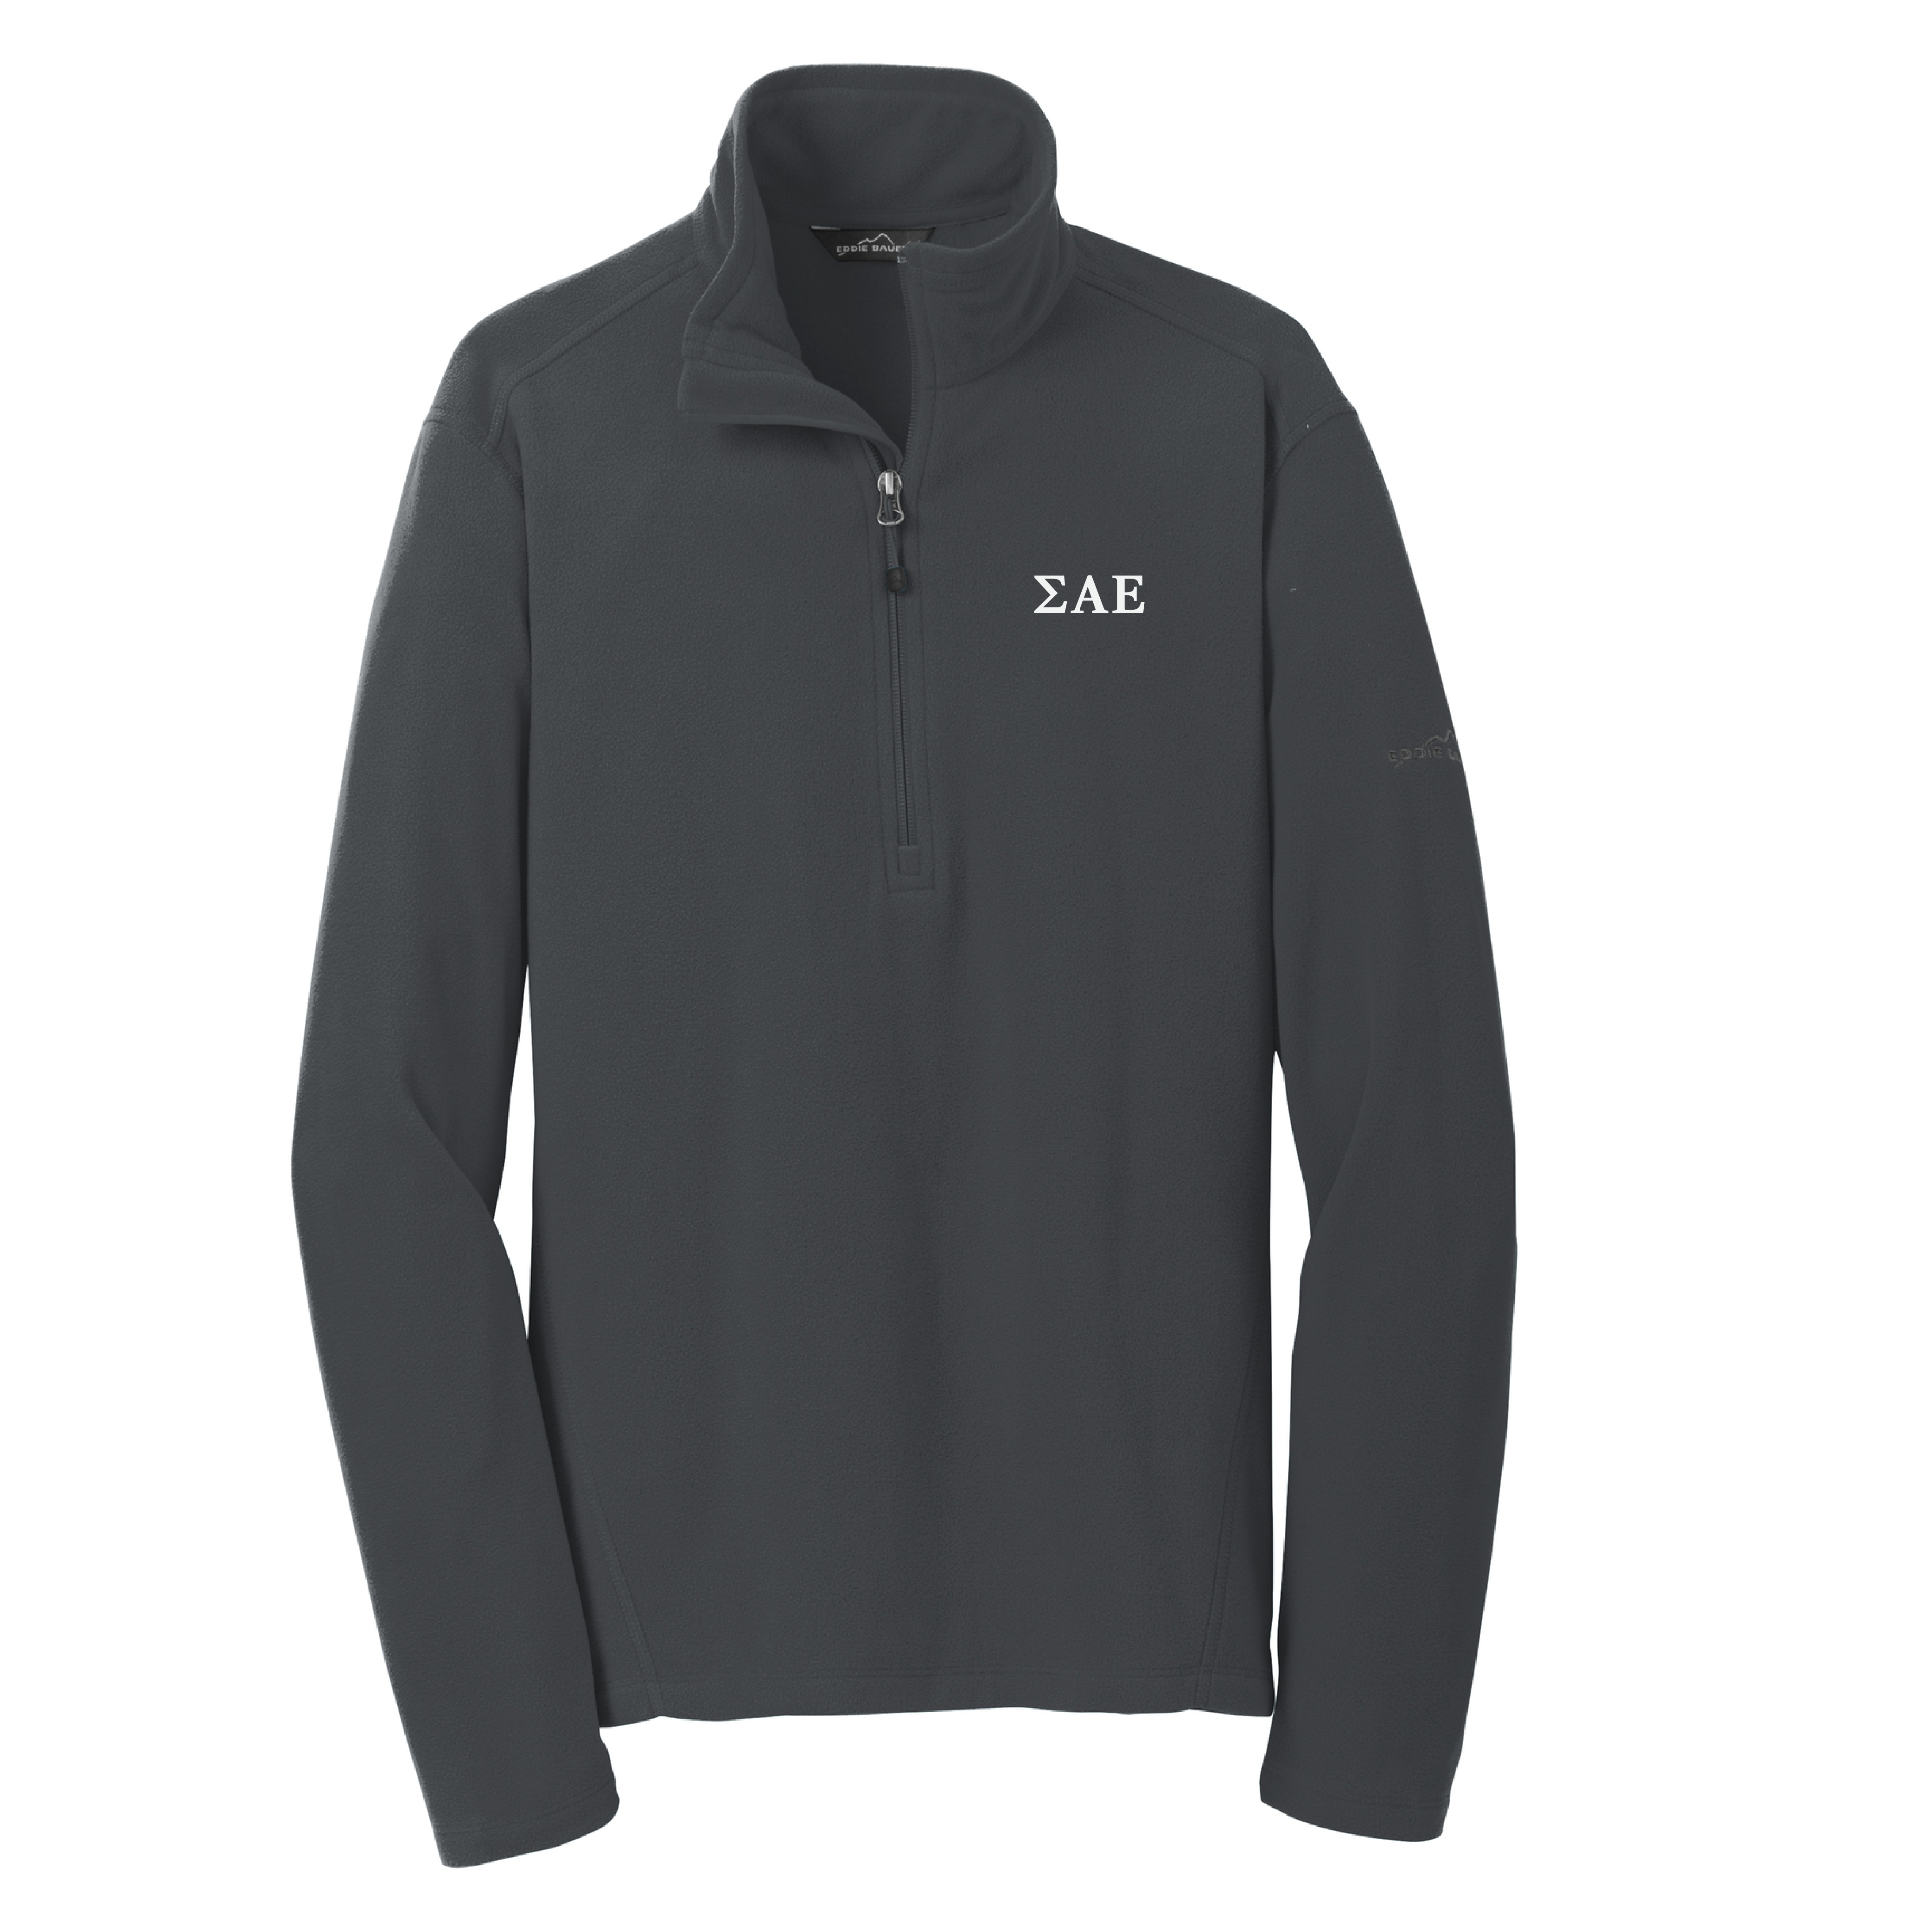 SAE - Letters 1/2-Zip Microfleece Jacket by Eddie Bauer in Grey Steel - The Sigma Alpha Epsilon Store